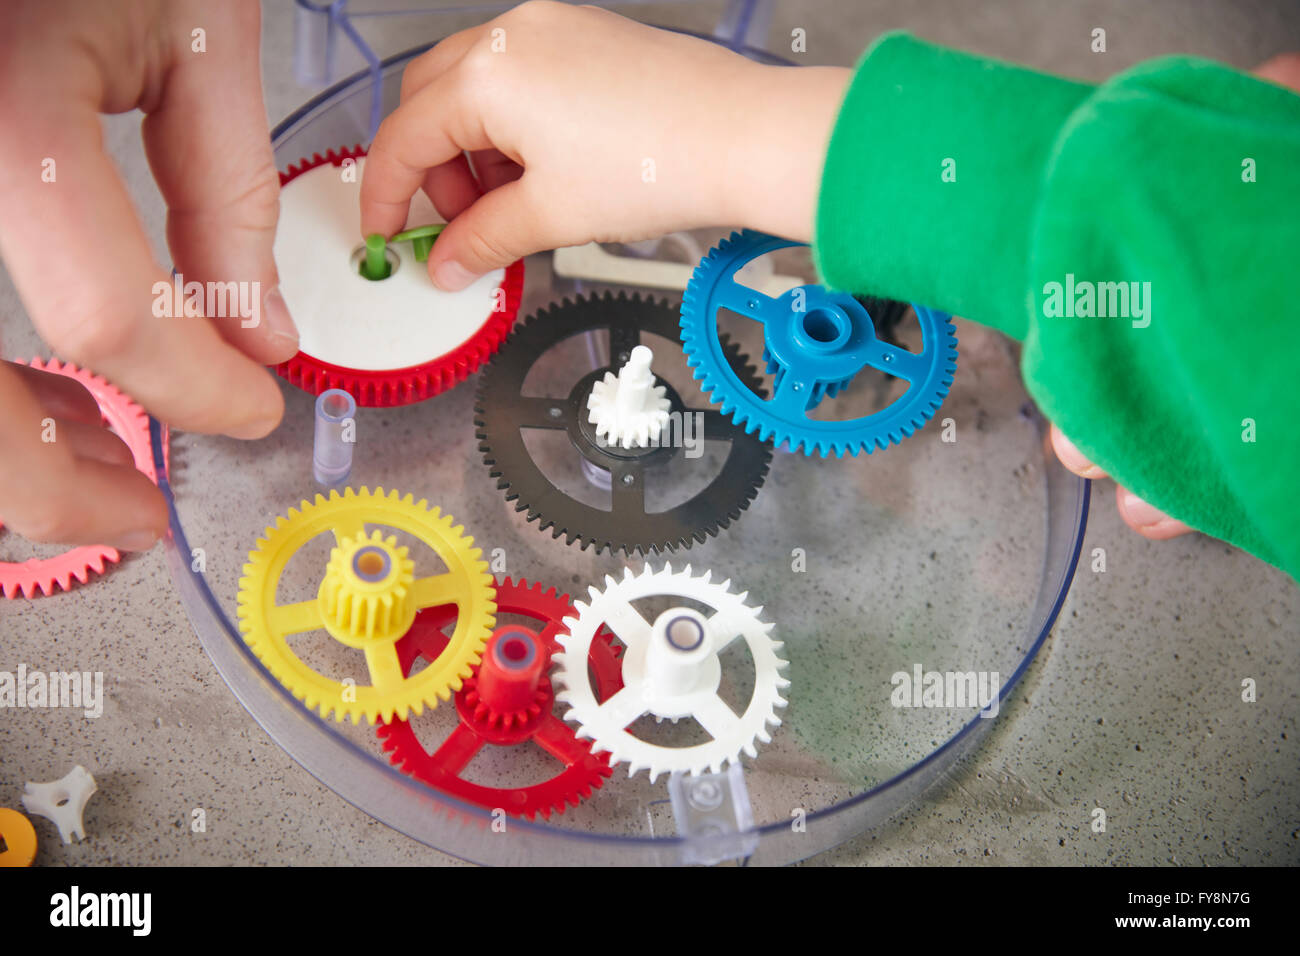 Hands assembling plastic cogwheels Stock Photo